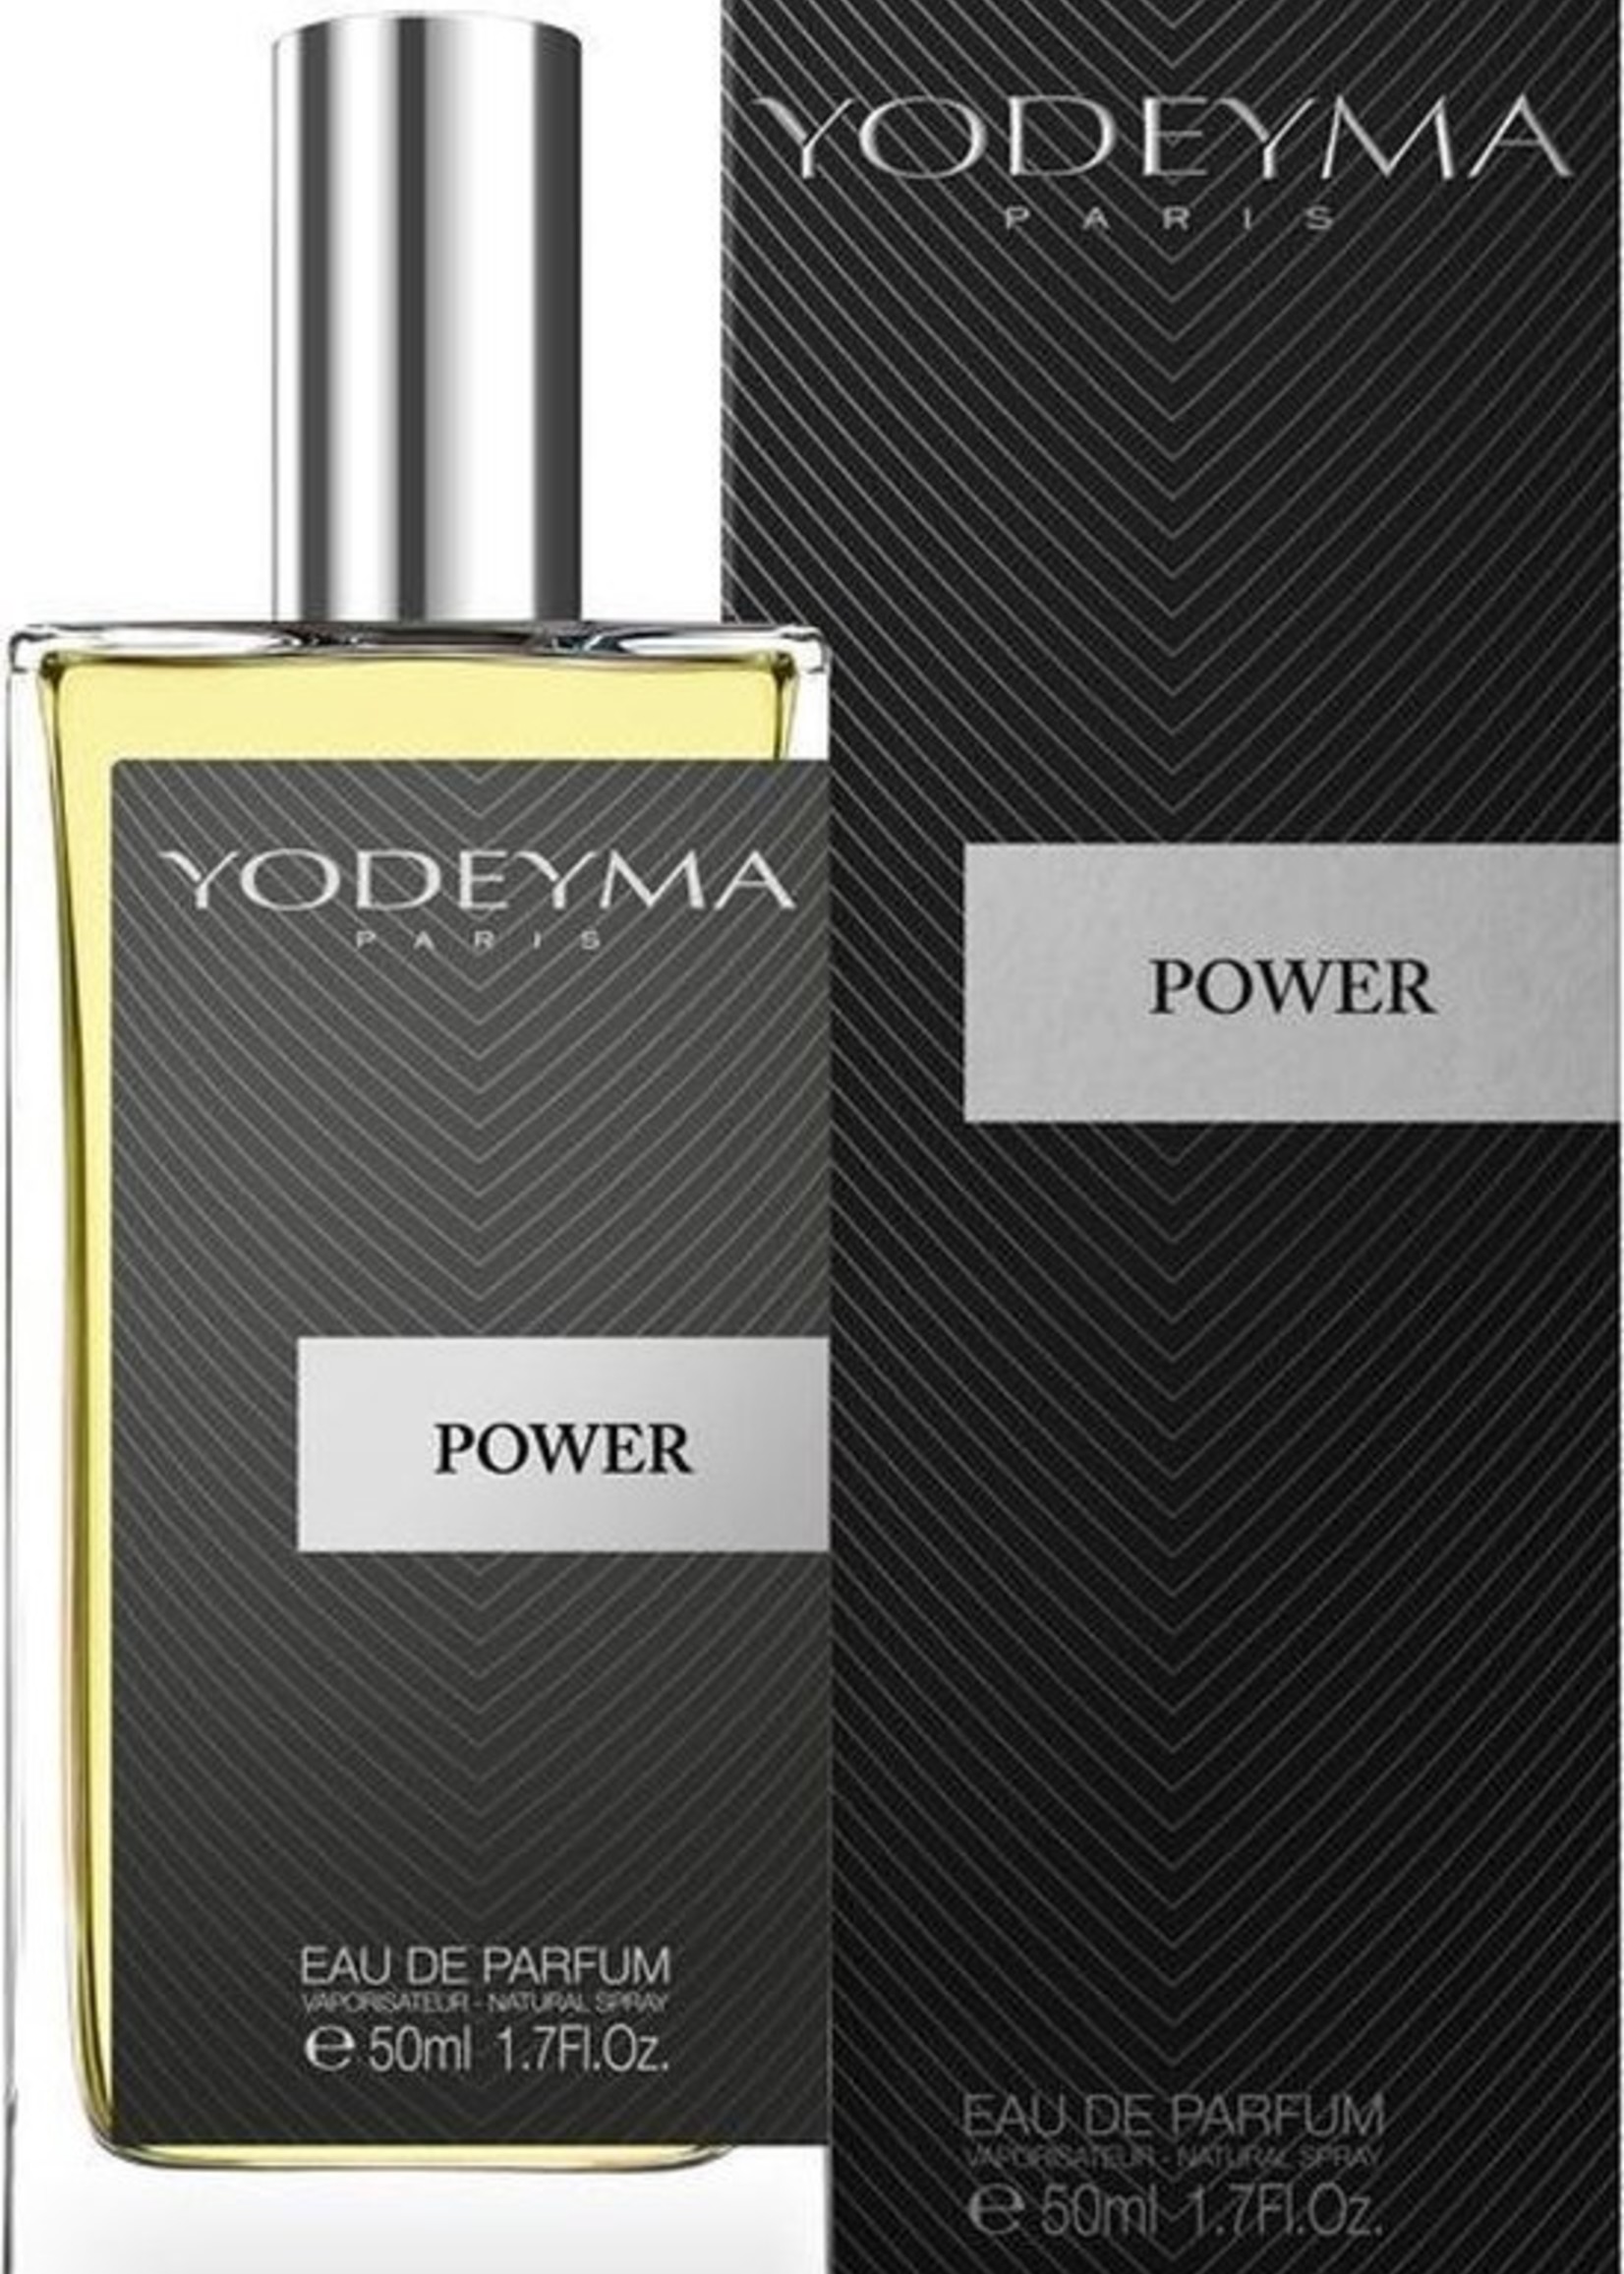 Yodeyma Parfums  POWER Eau de Parfum 50 ml.